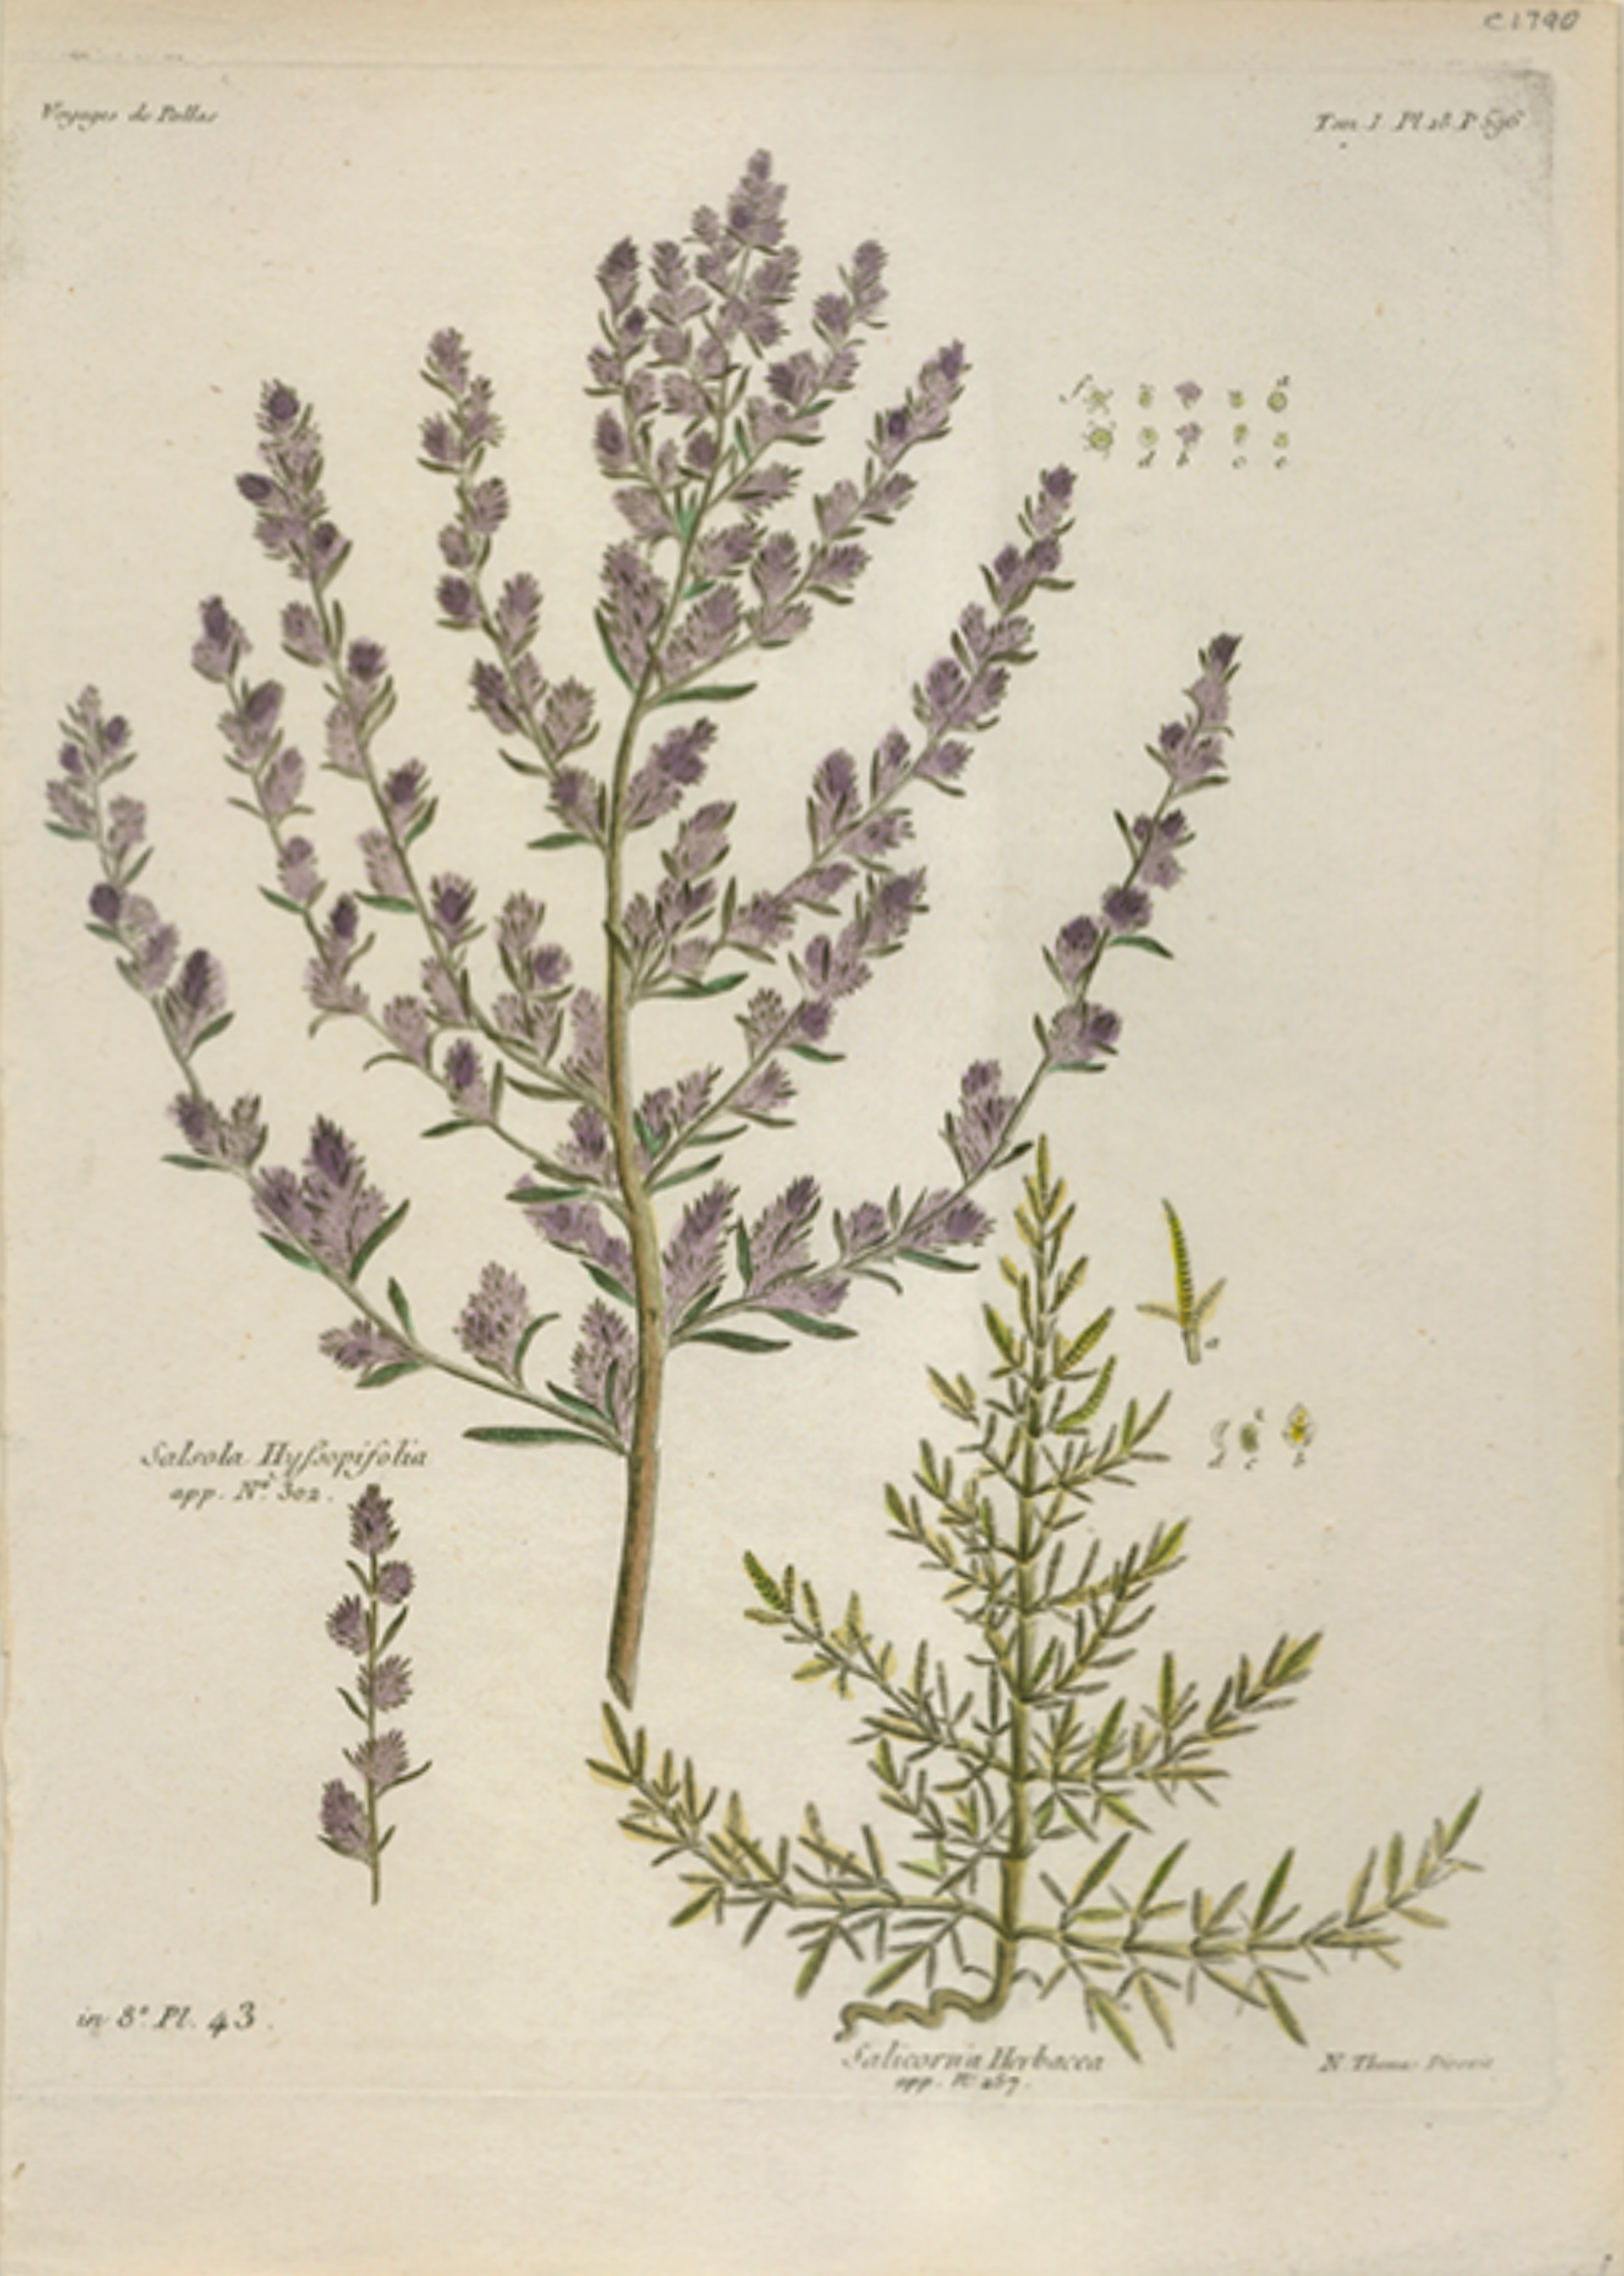 Salsola Hyssopifolia, Plate 18